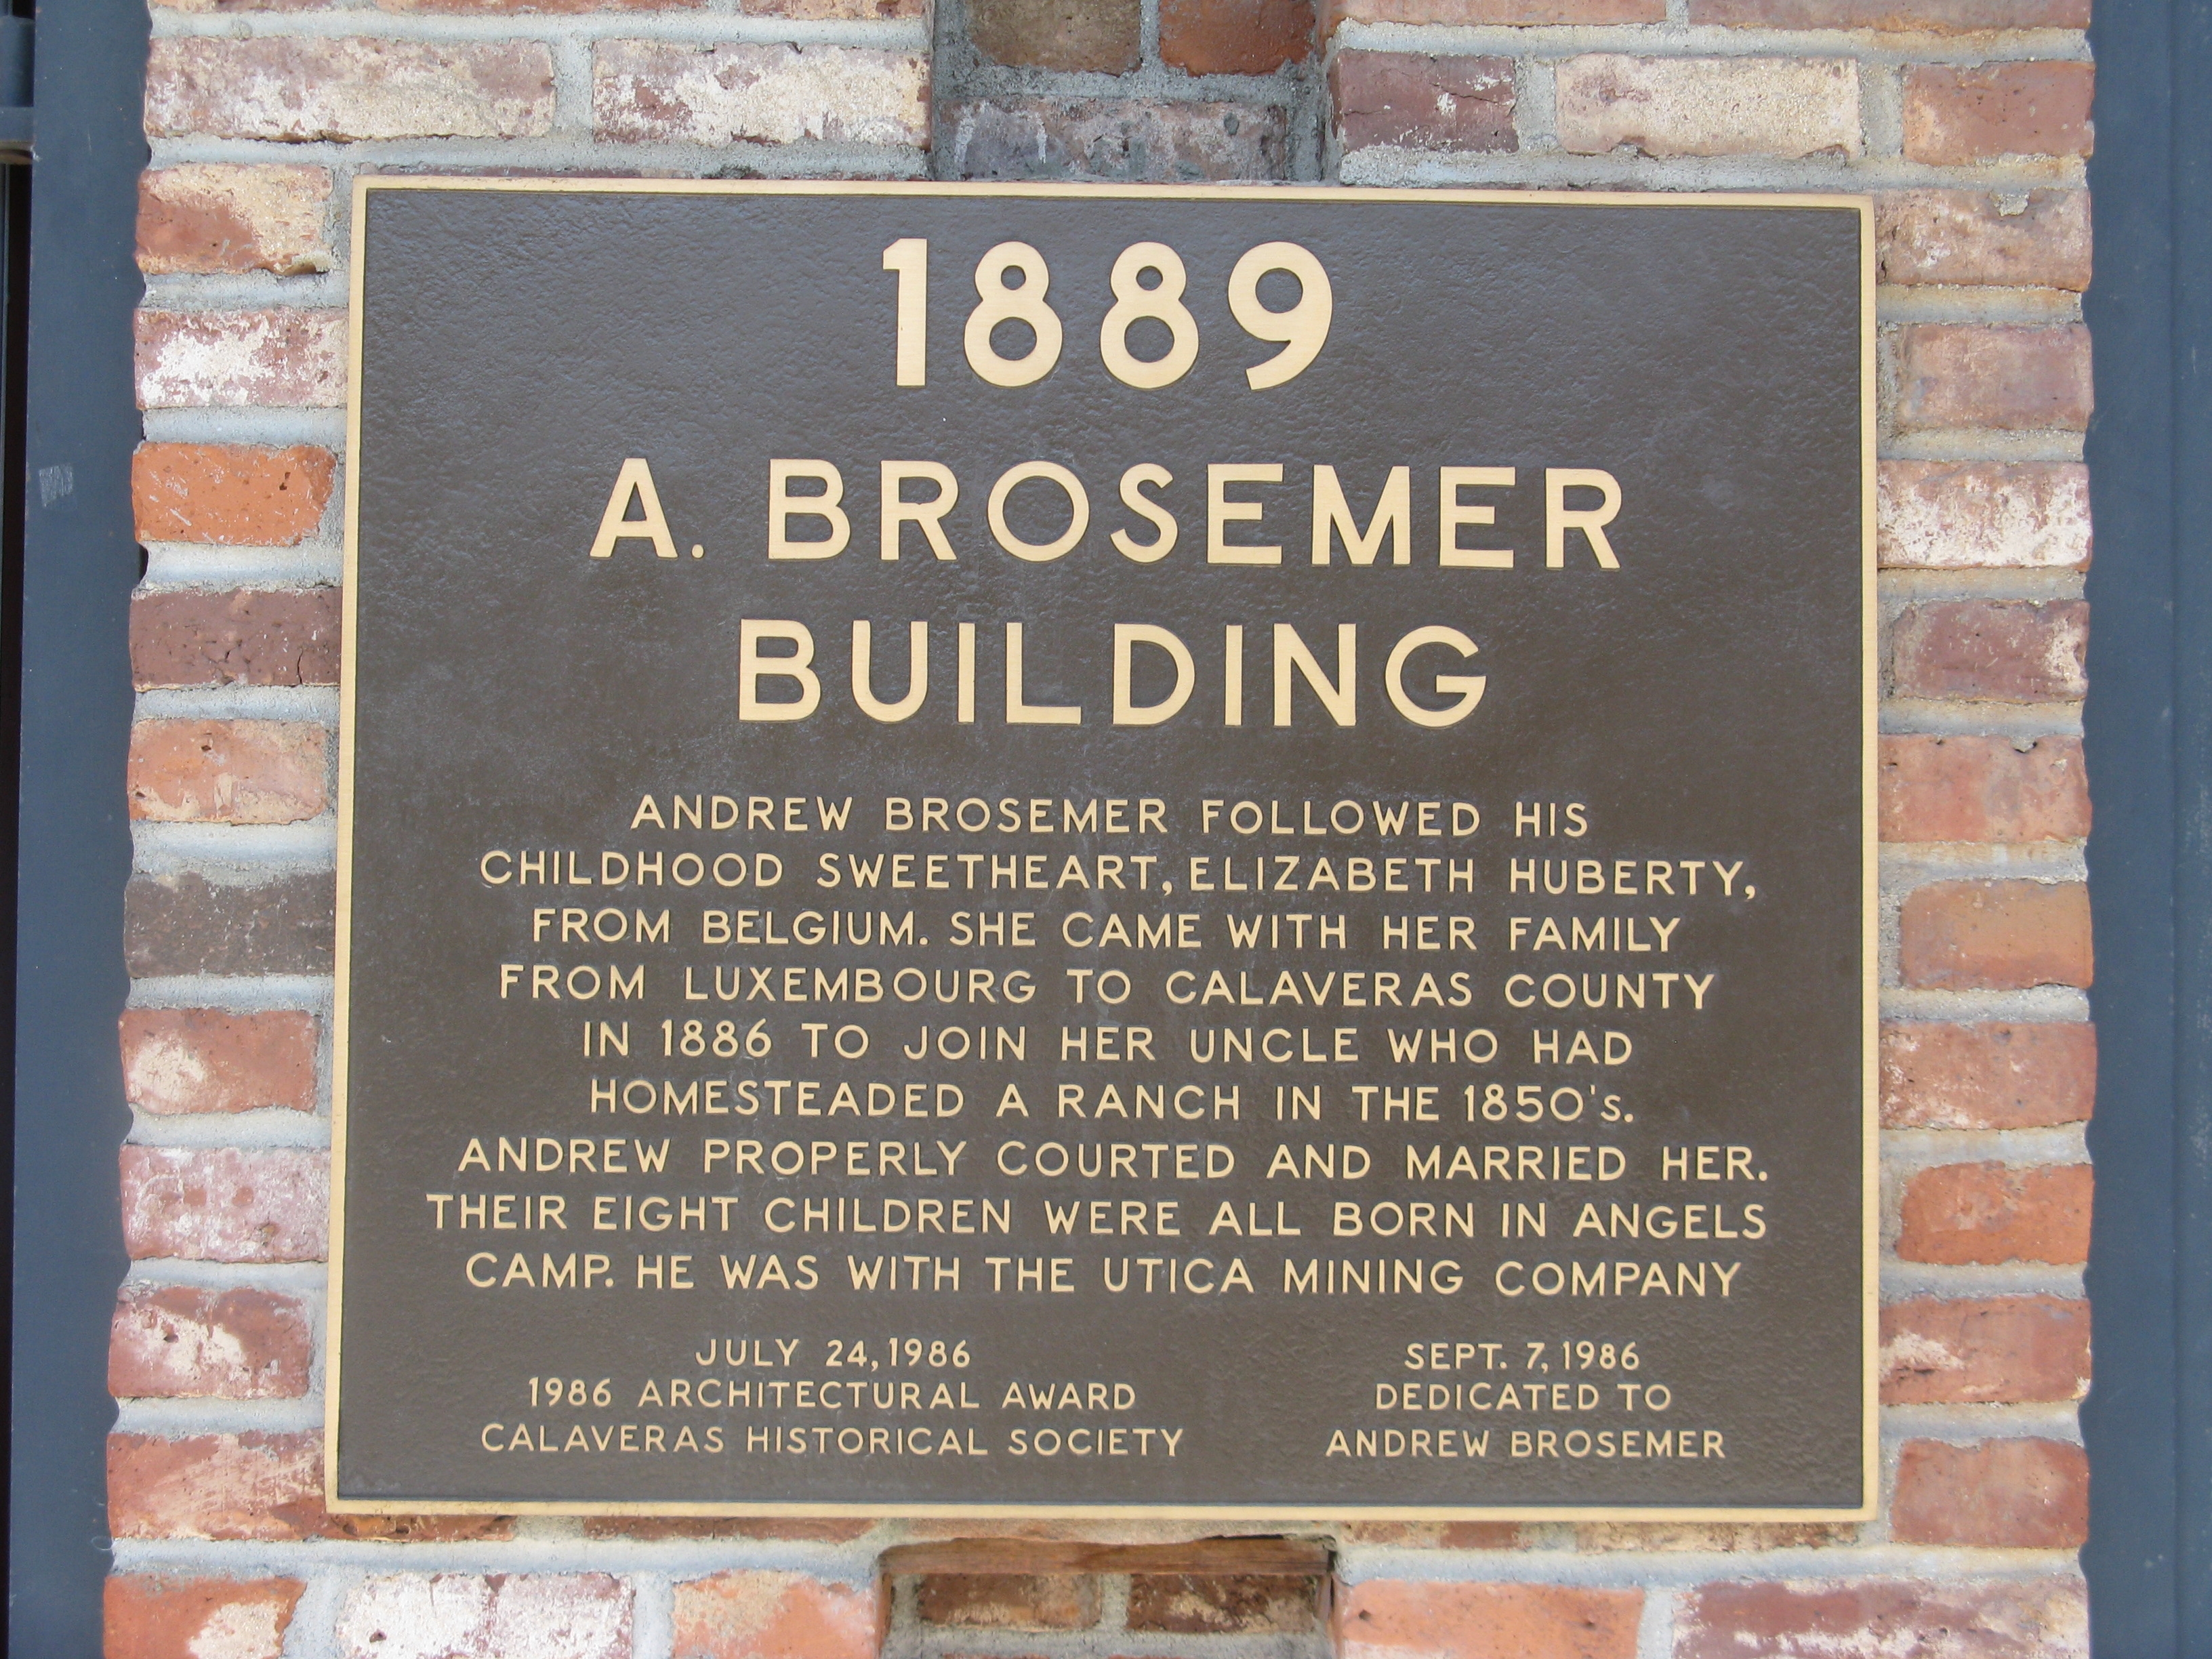 A. Brosemer Building Marker